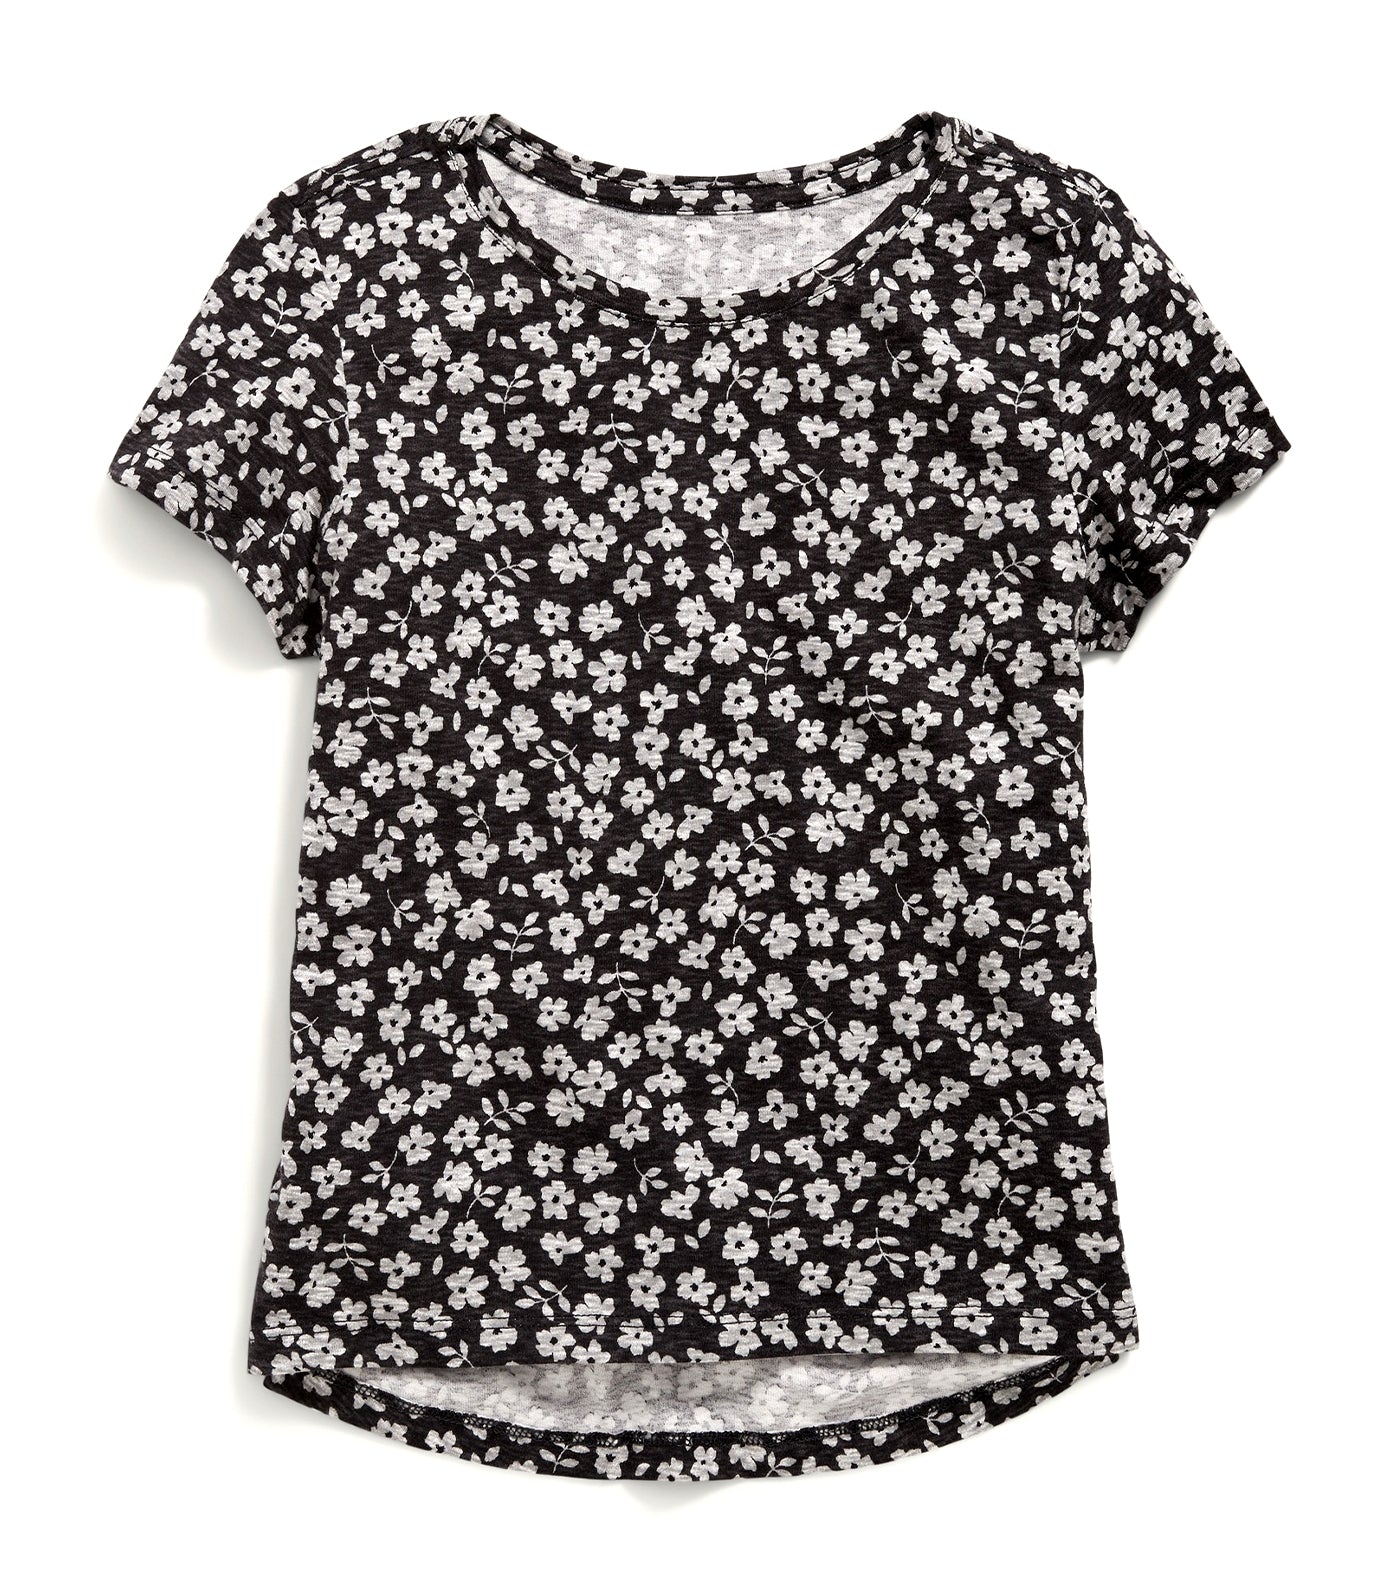 Softest Printed T-Shirt for Girls - Black Floral